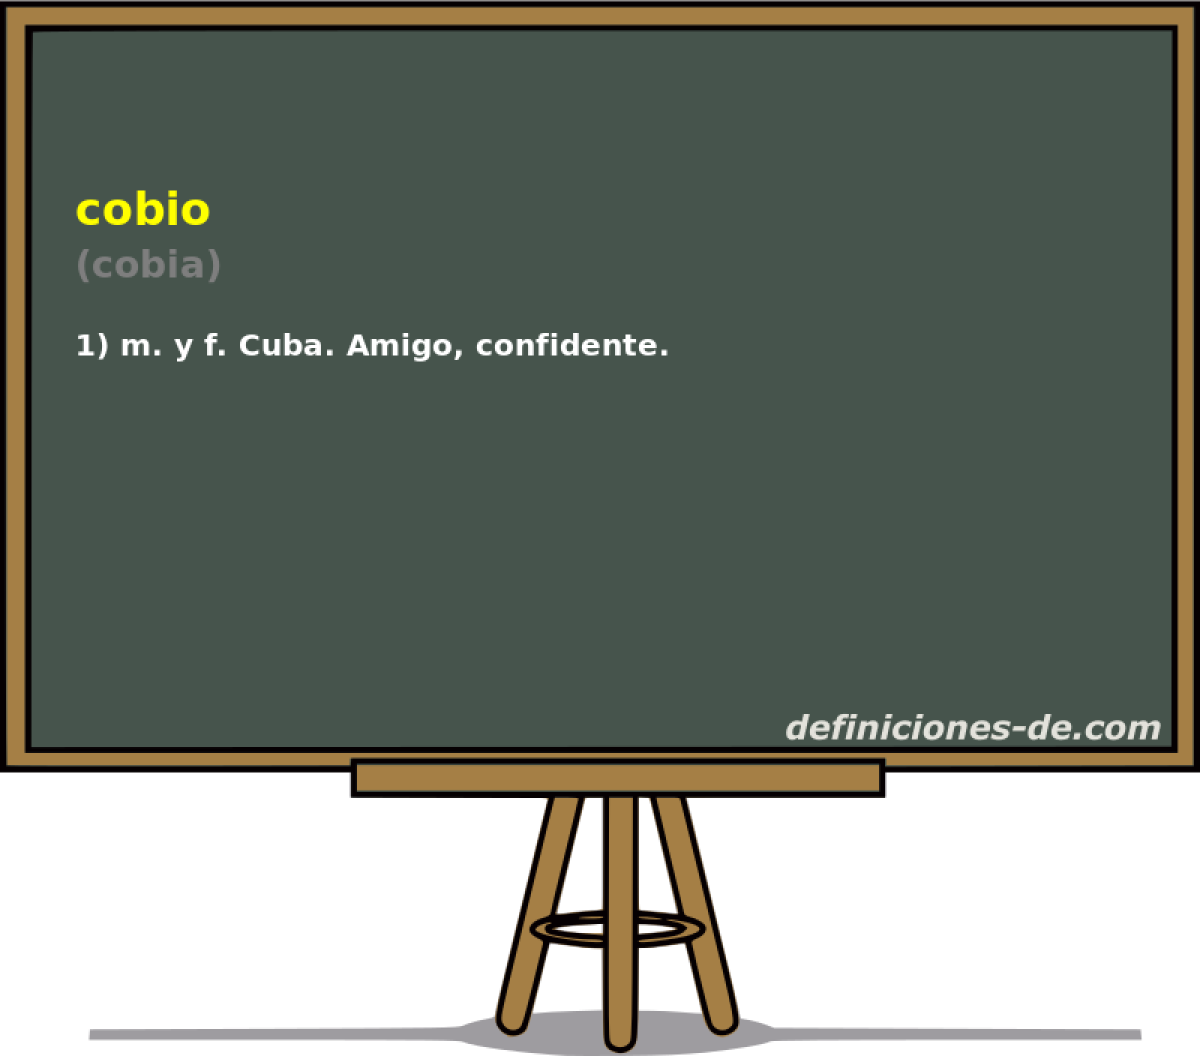 cobio (cobia)